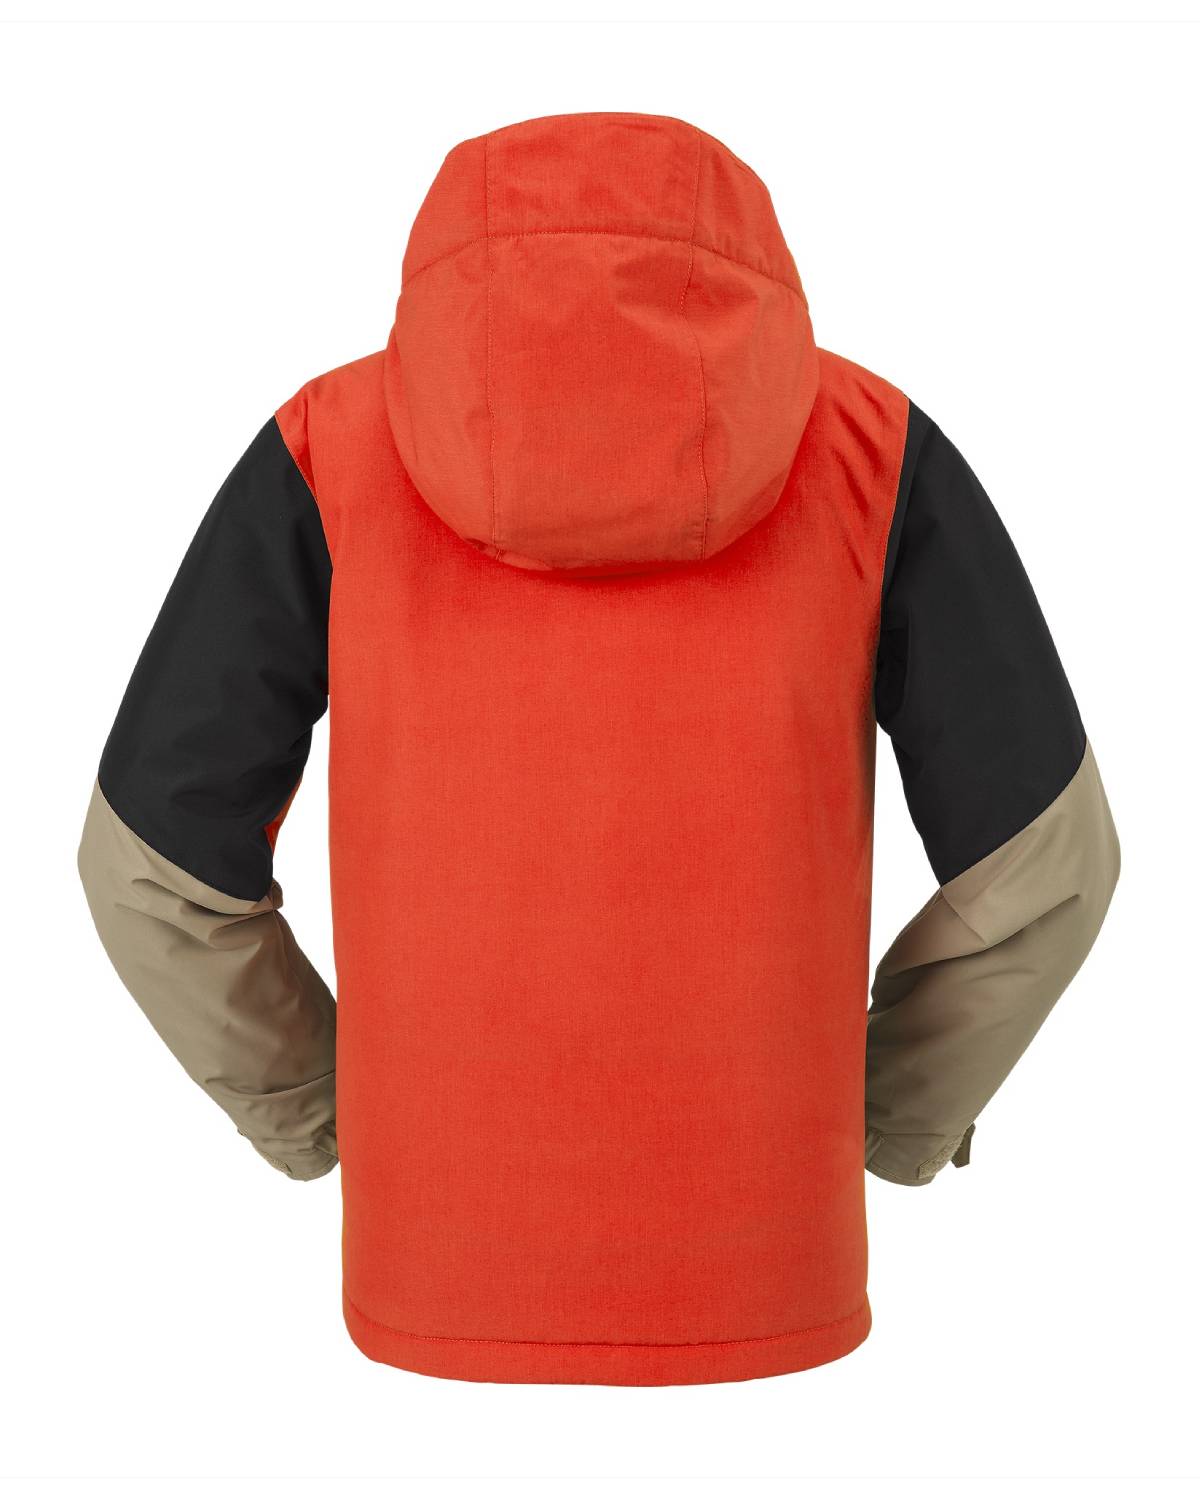 Volcom Kids Vernon Insulated Ski Jacket in Orange (Ages 6 - 14)